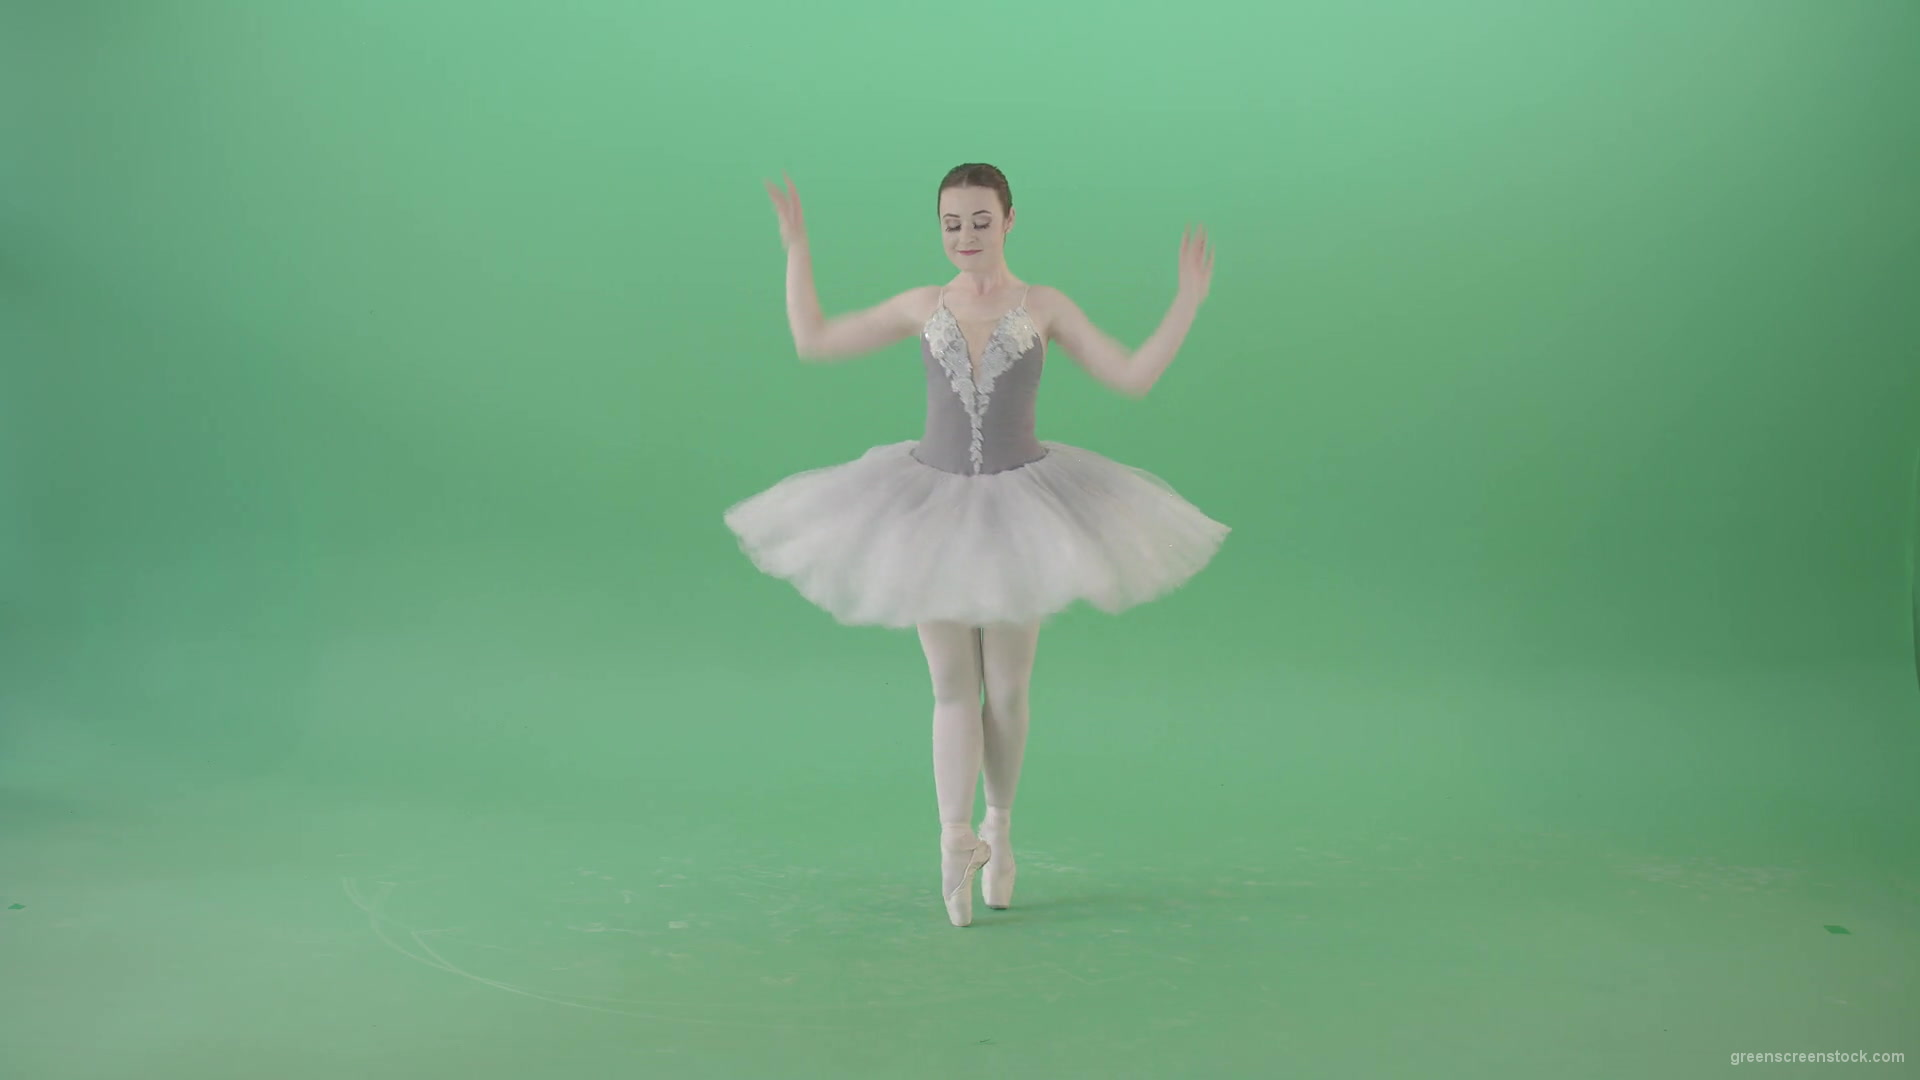 Ballerina-Woman-dancing-elegnatly-ballet-swan-lake-dance-in-green-screen-studio-4K-Video-Footage-1920_006 Green Screen Stock